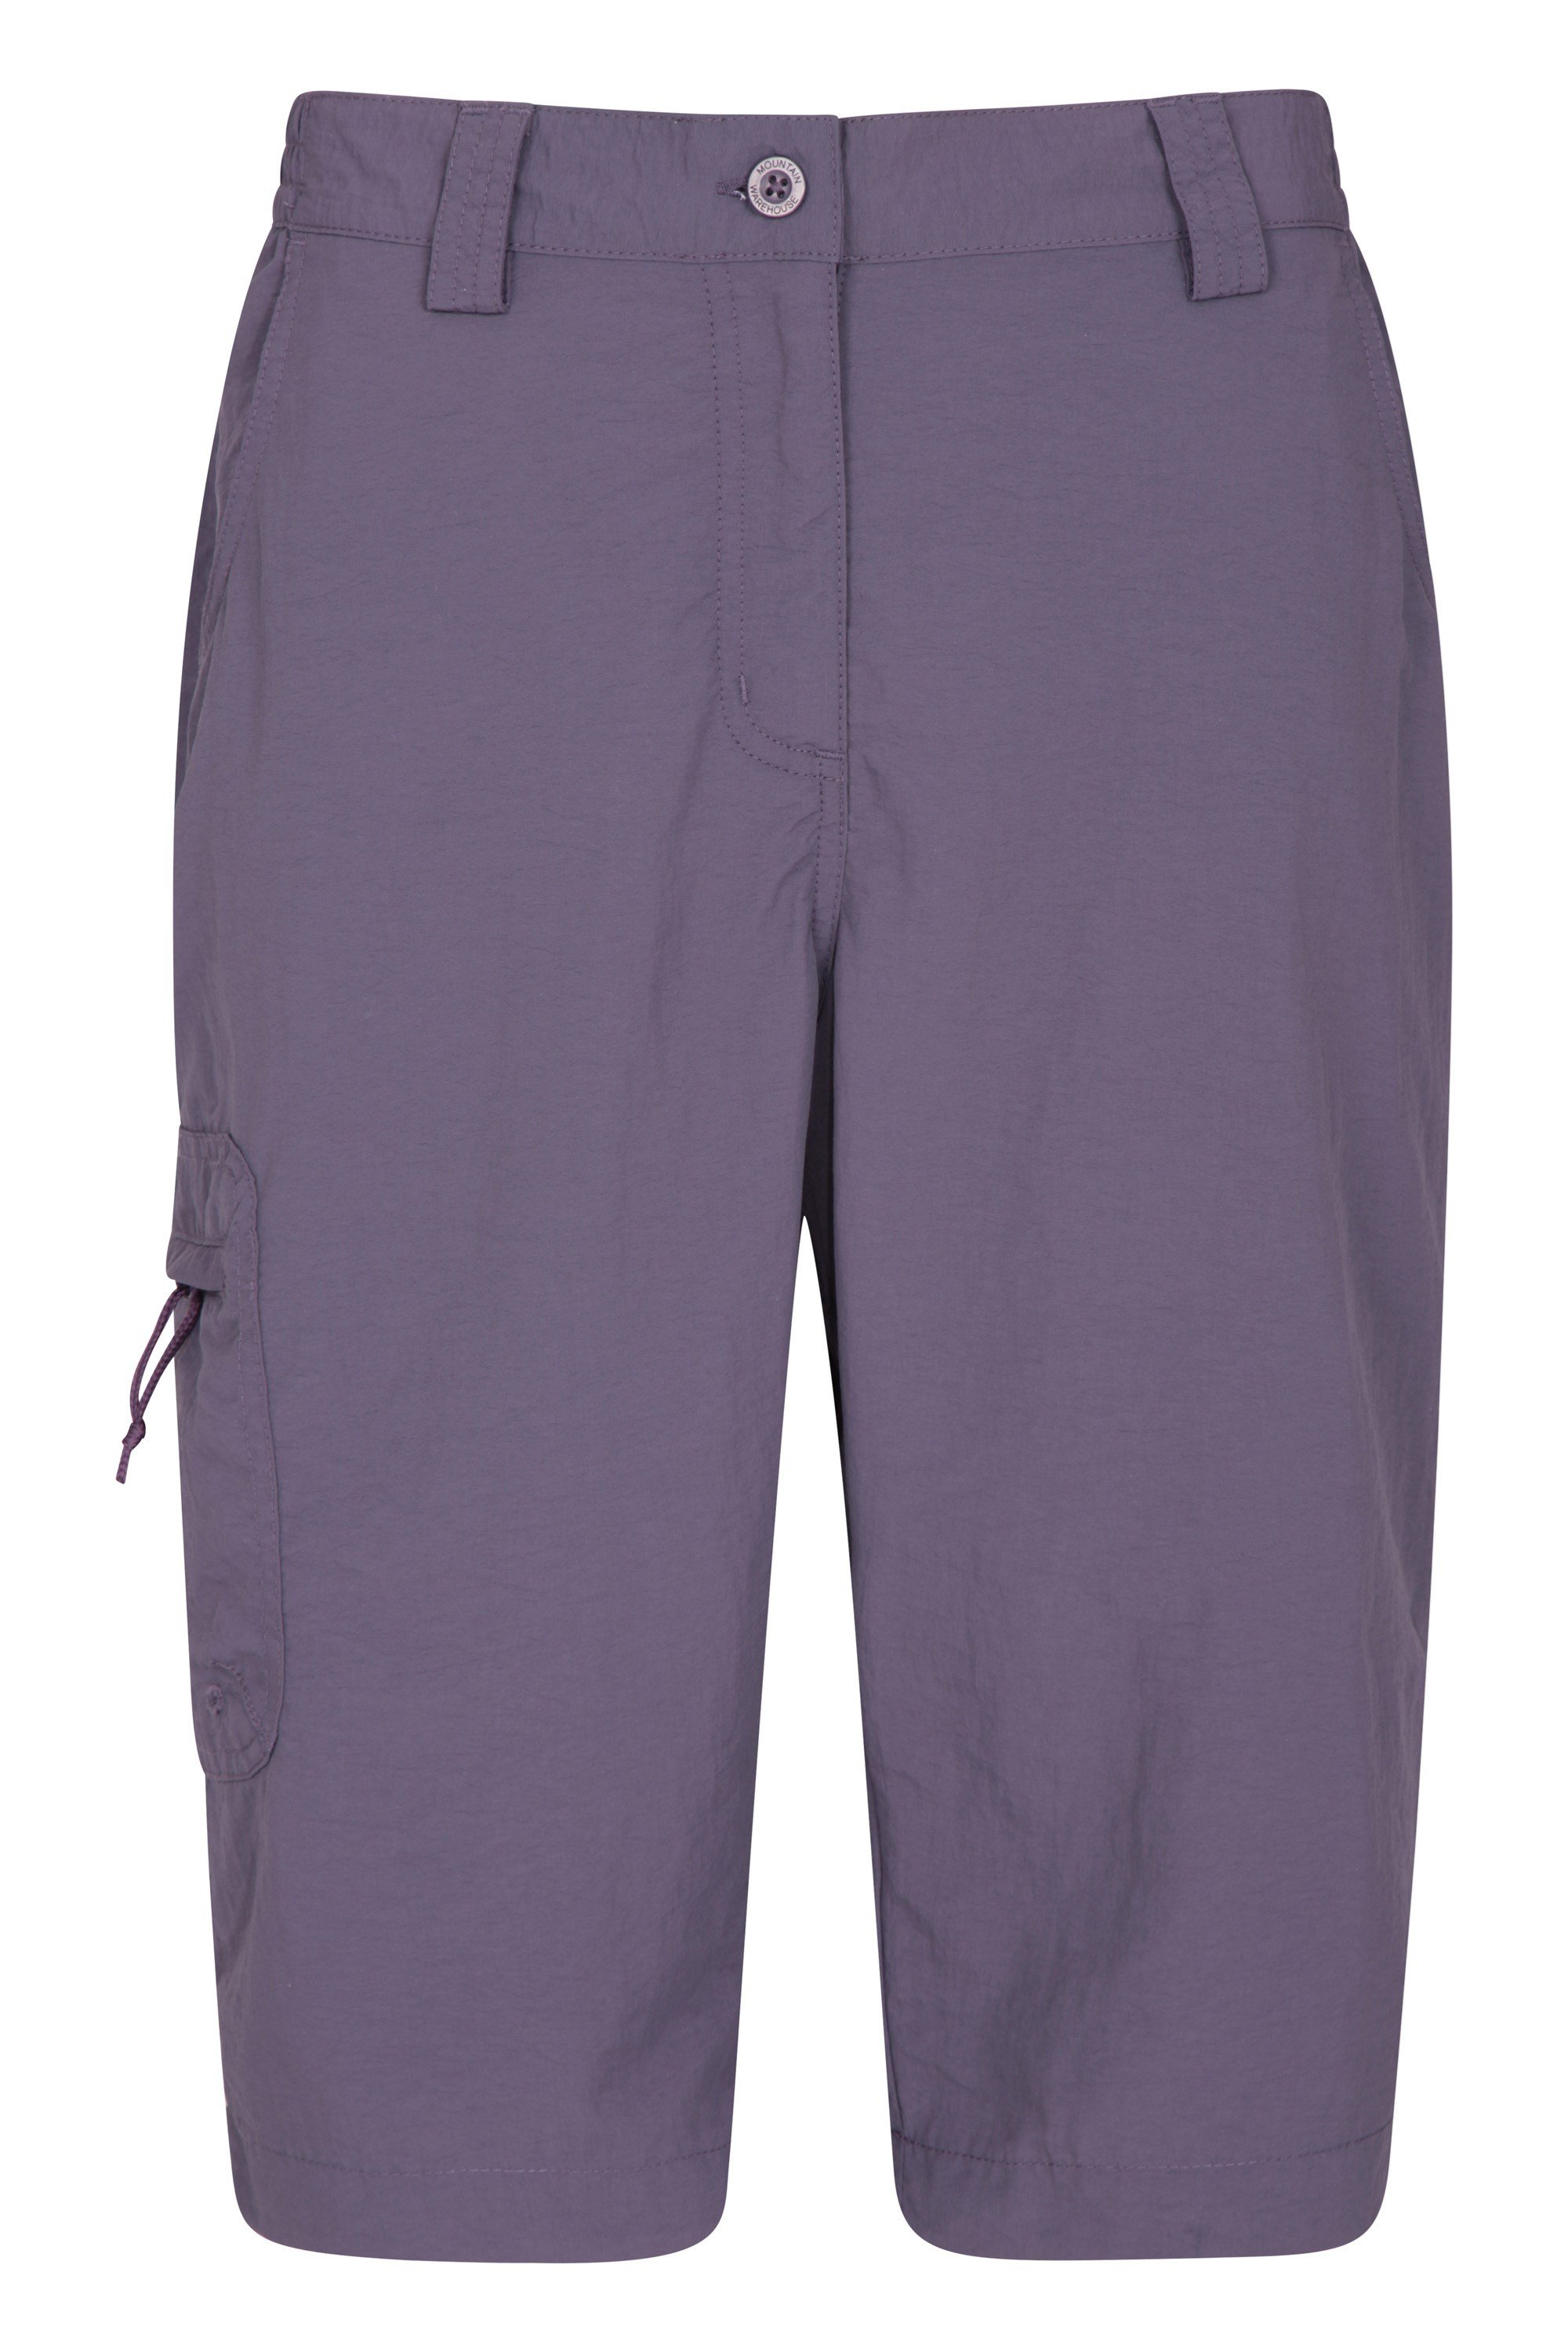 Pantalons Explore Capri Femmes - Violet